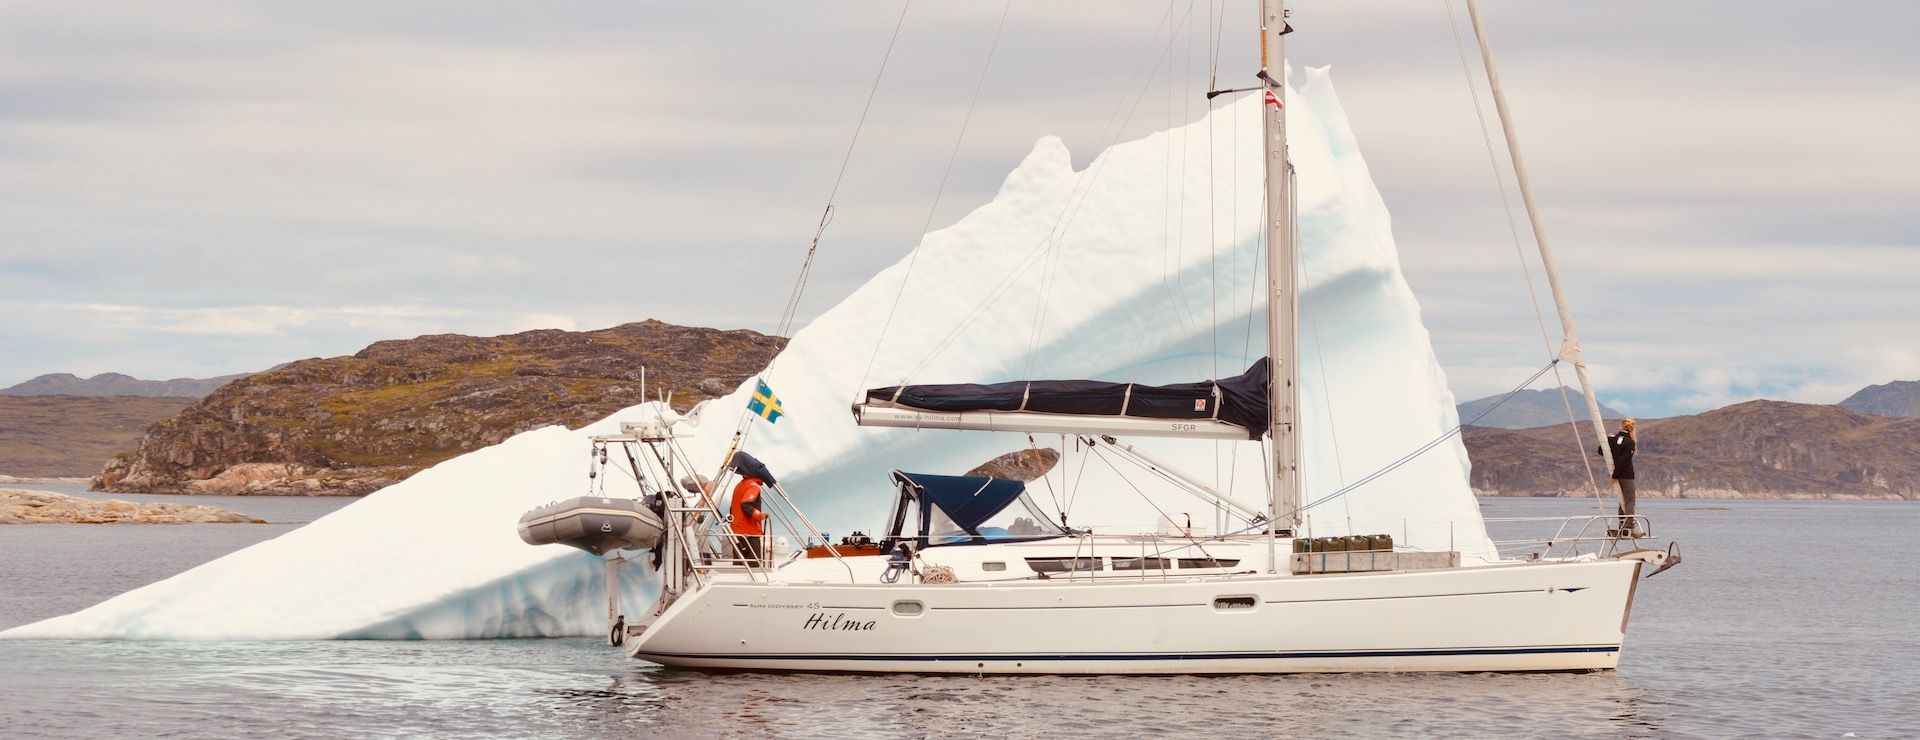 diy hydro generator sailboat